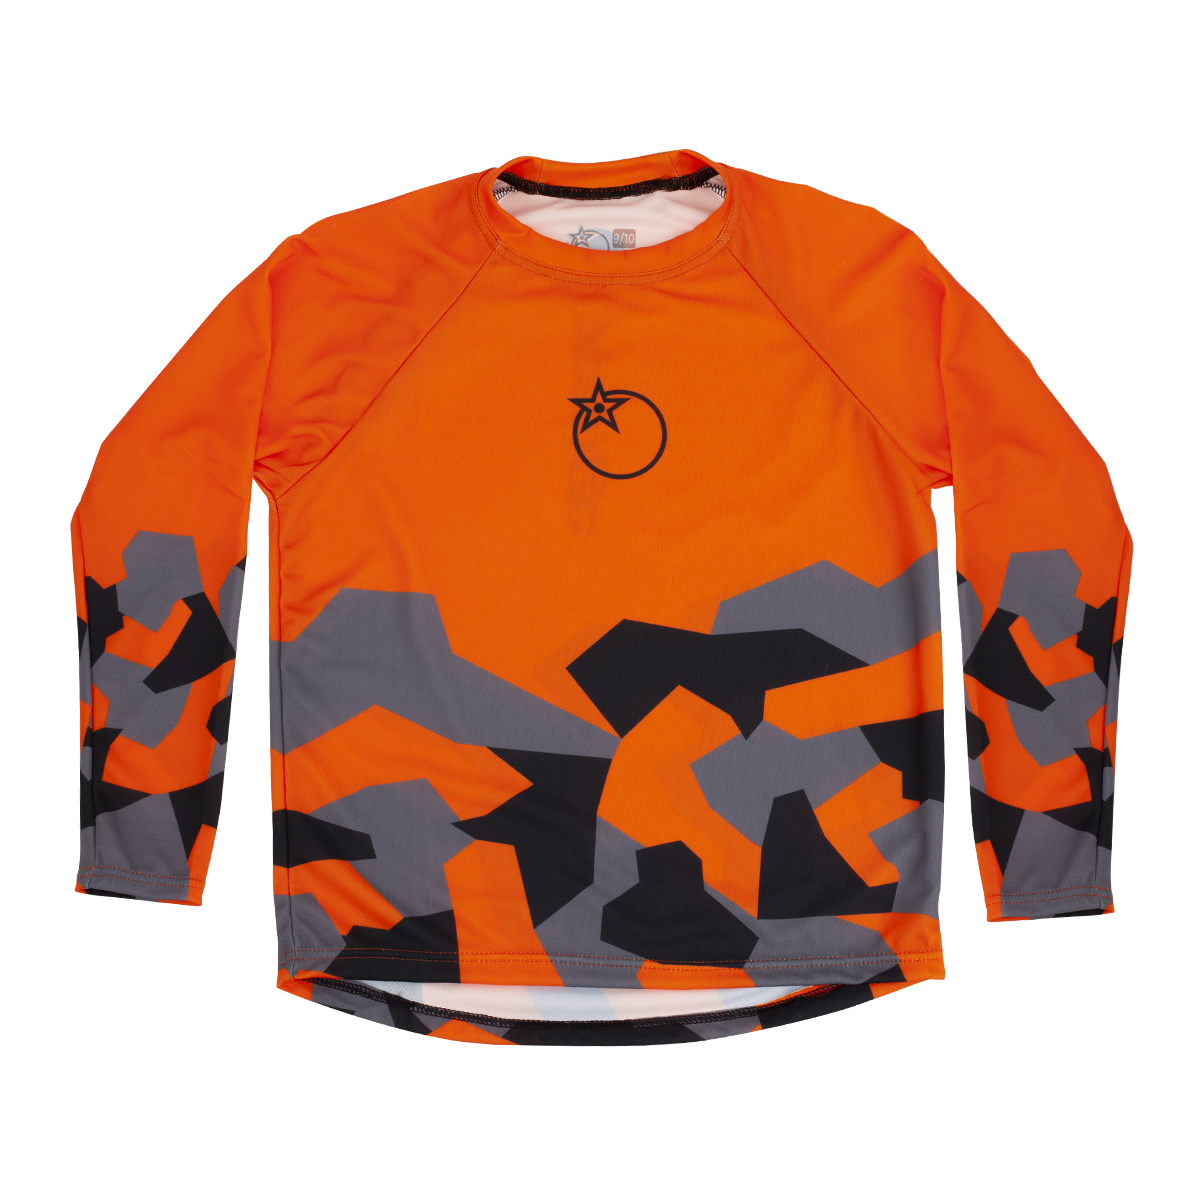 Kids Urban Orange Camo Jersey long Sleeve (Orange/Black)